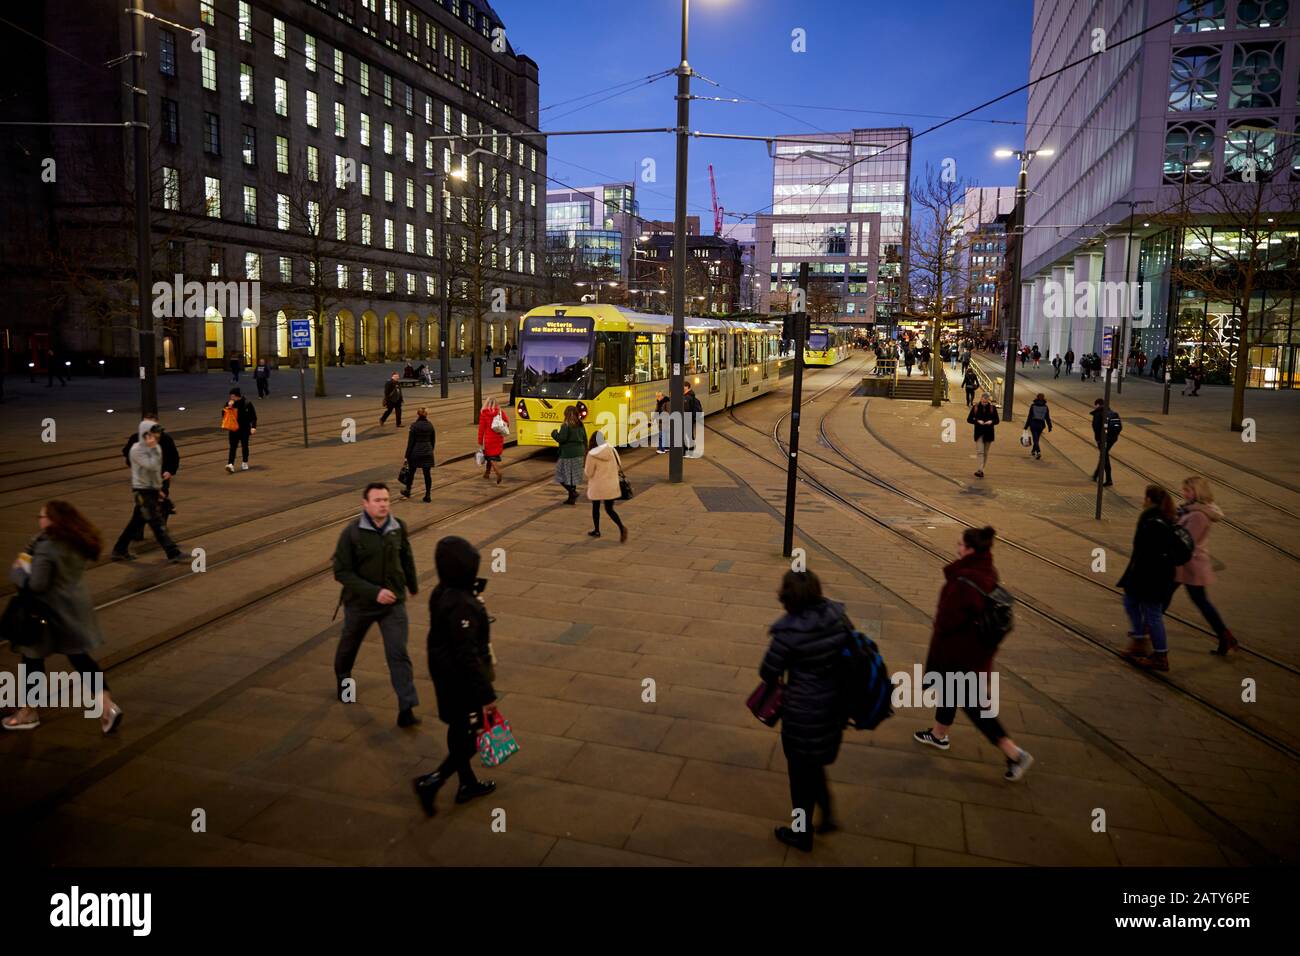 Manchester city centre Peters Square Metrolink tram halt crossing exchange passing the historic stone cross Stock Photo